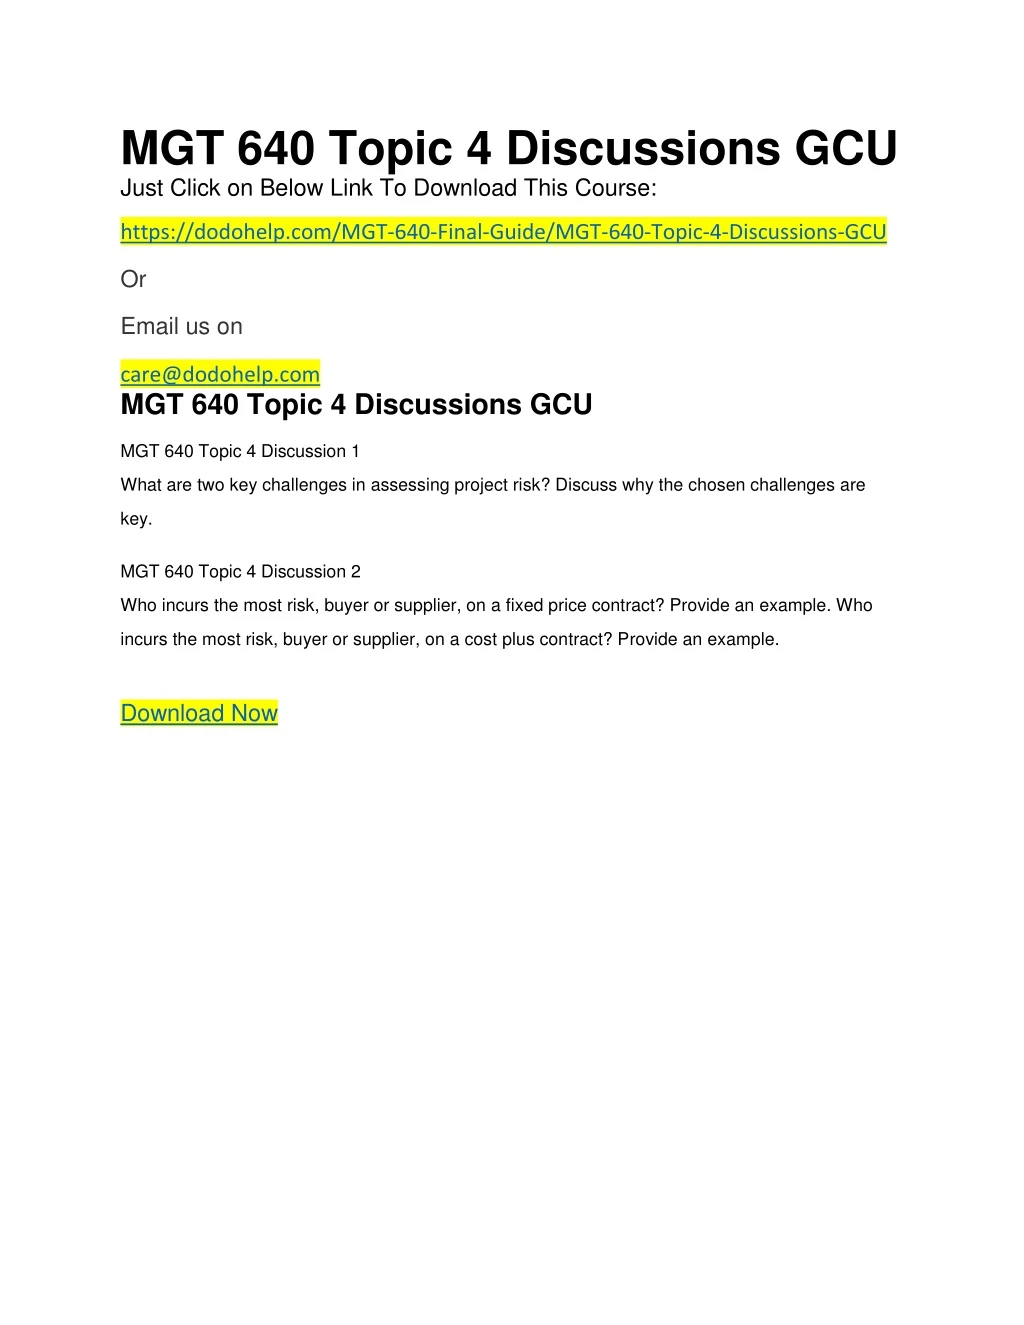 mgt 640 topic 4 discussions gcu just click